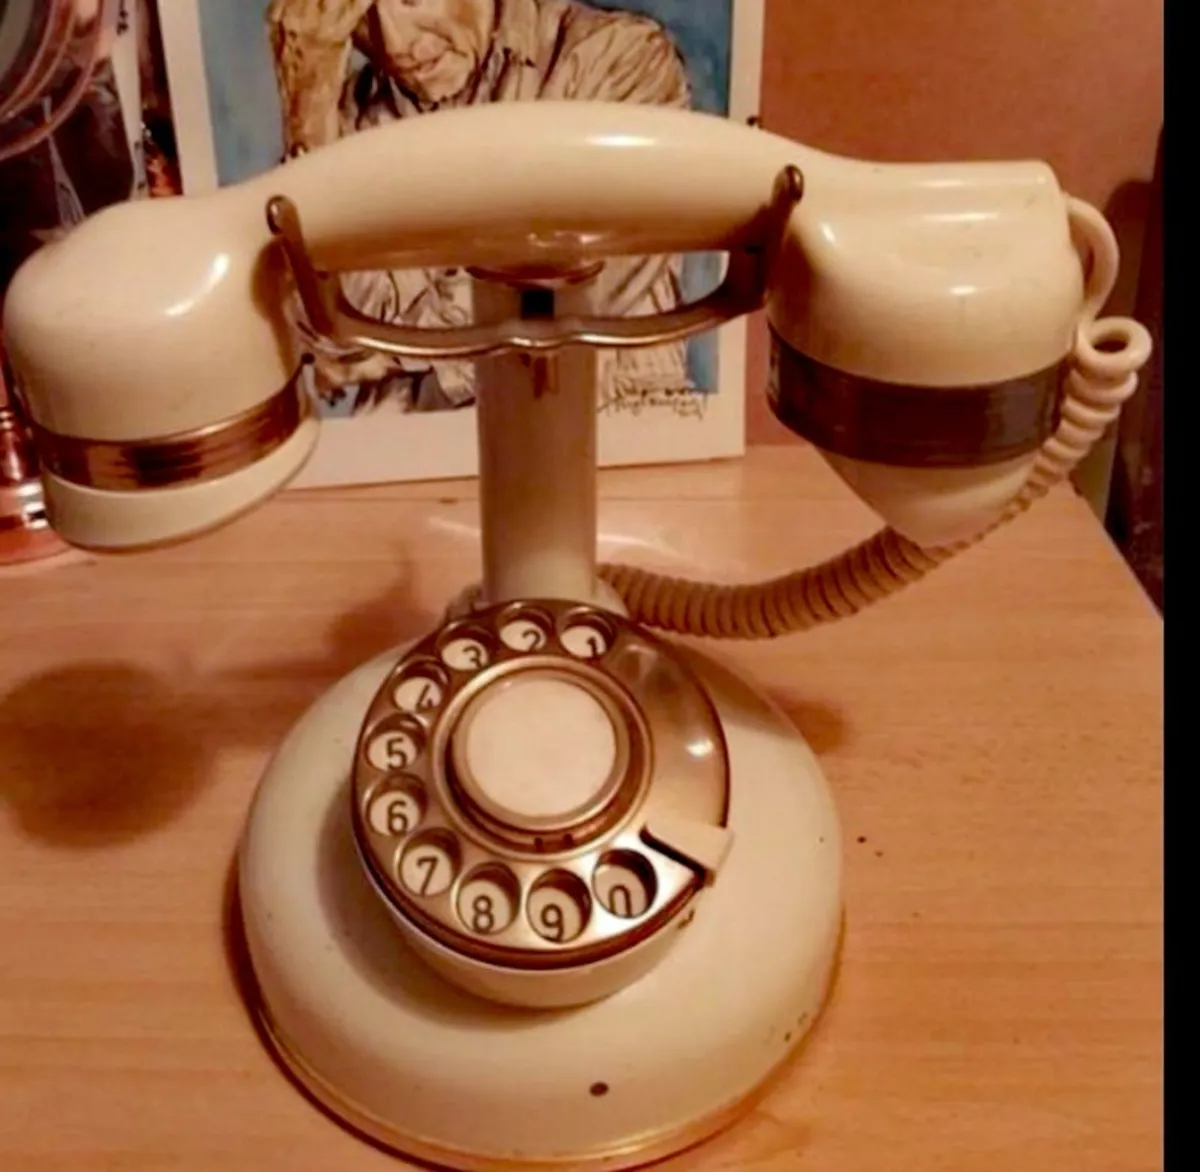 18karat gold plated telephone